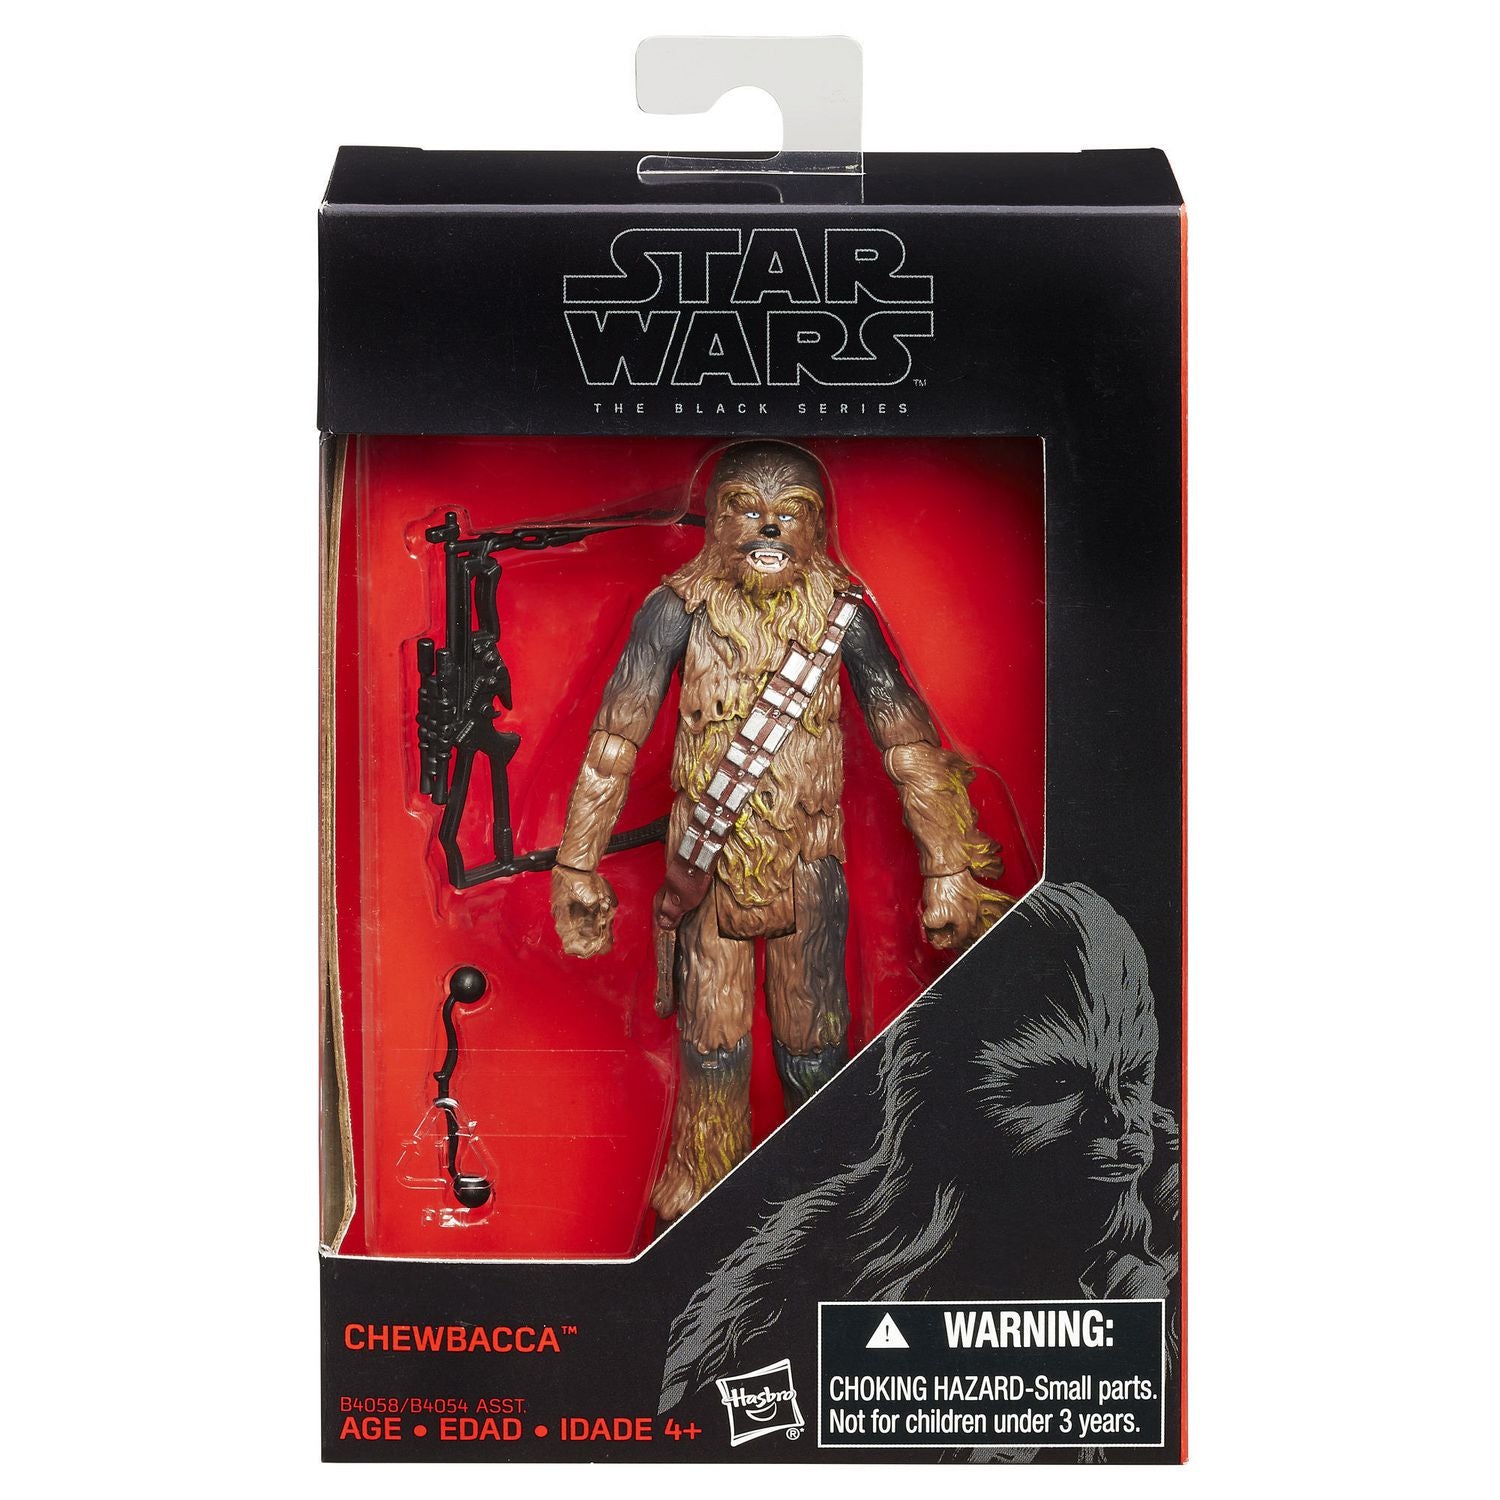 Hasbro Star Wars Black Series 2015 Chewbacca Walmart Exclusive 3.75 Inch Figure